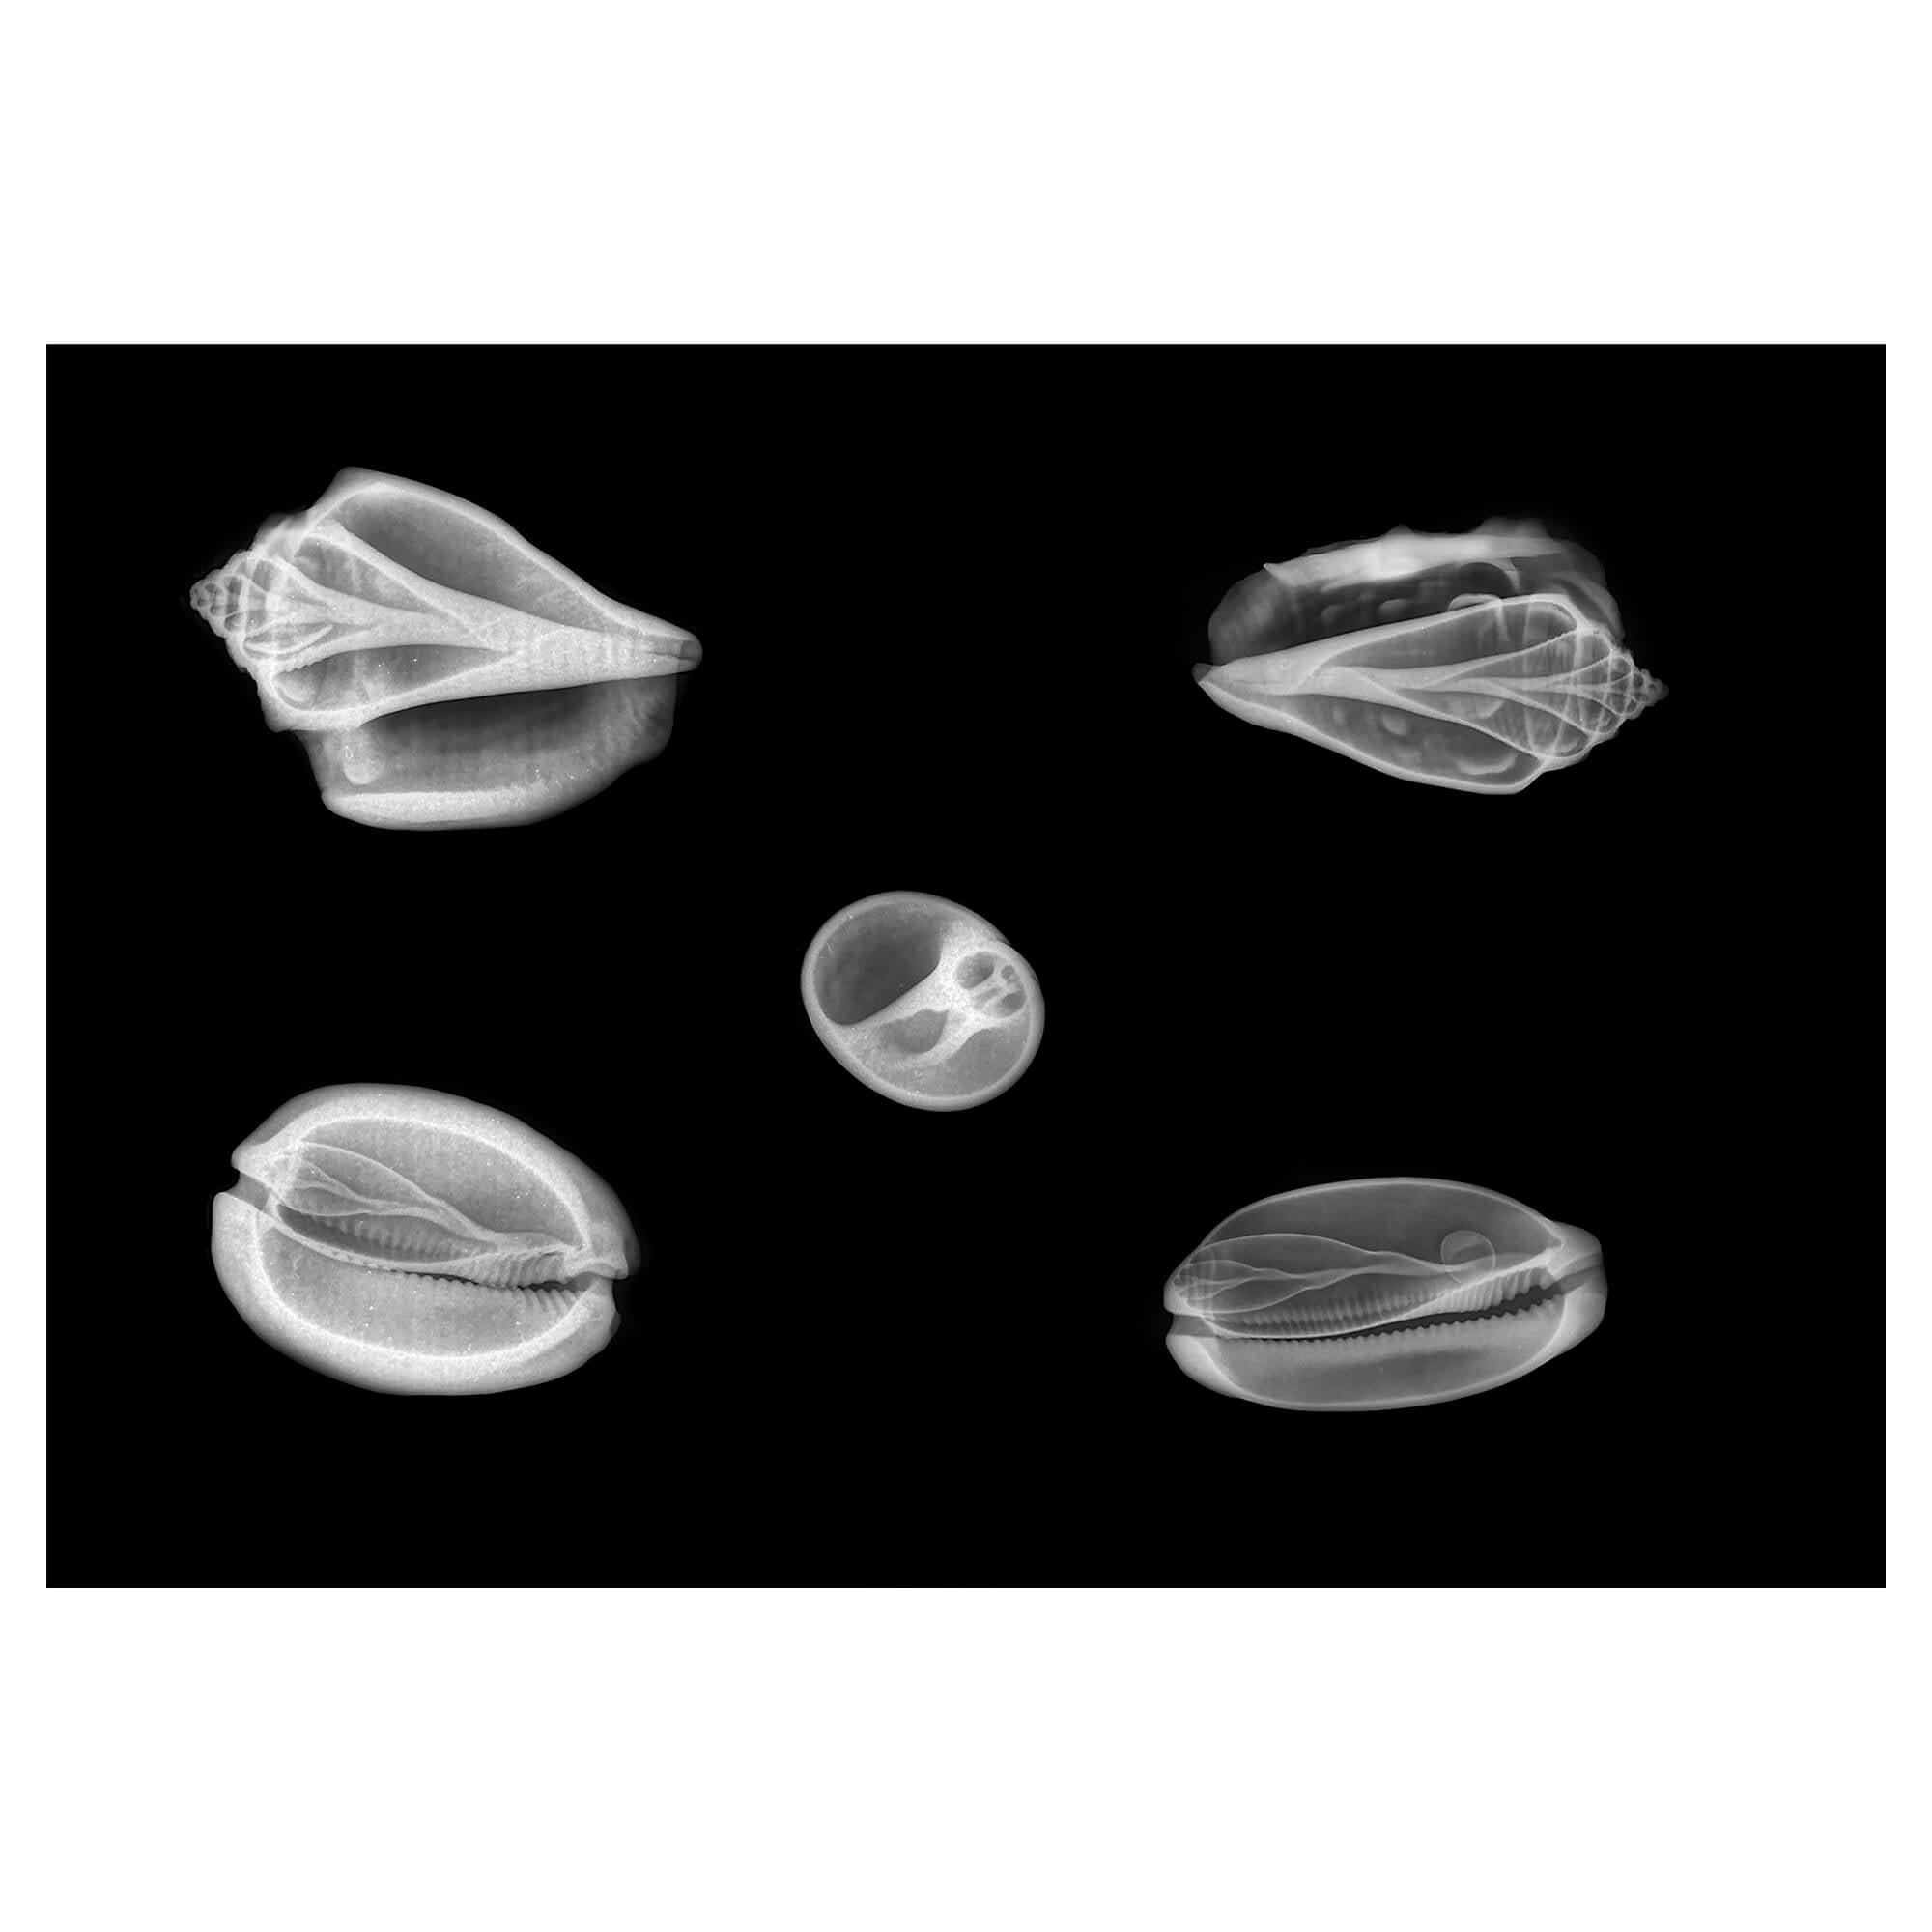 X-ray art print showcasing five distinct seashells by Hawaii artist Michelle Smith